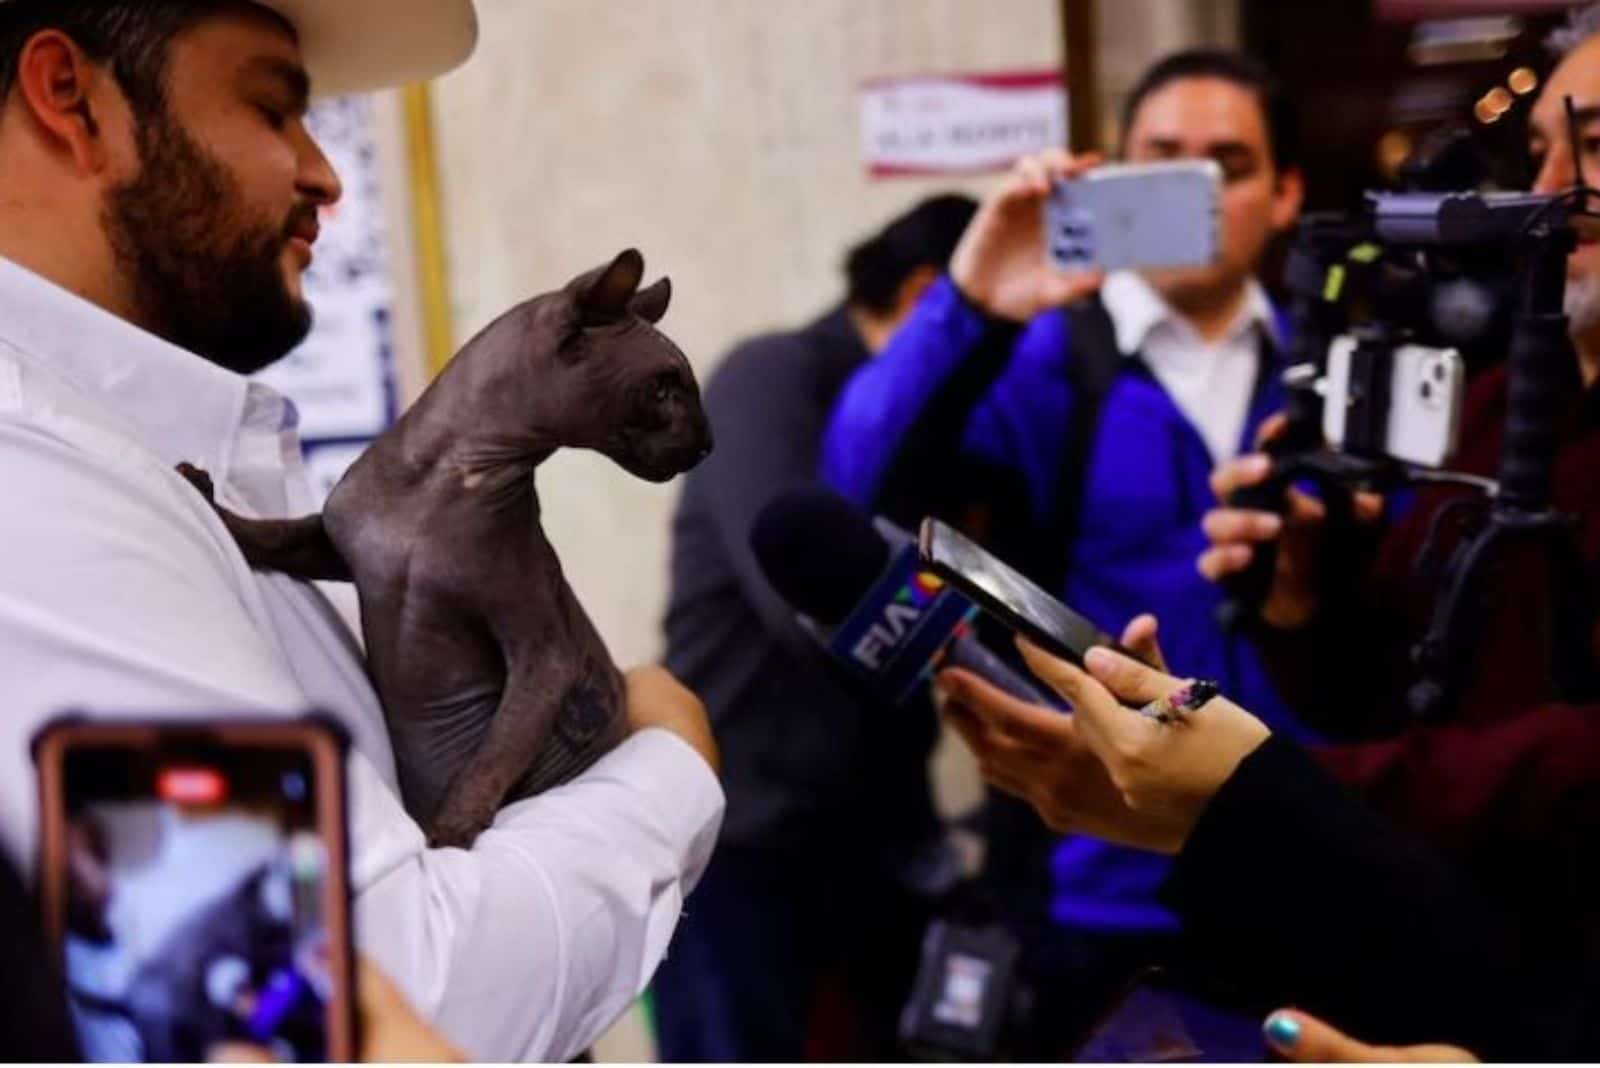 popular sphynx cat in front of journalists